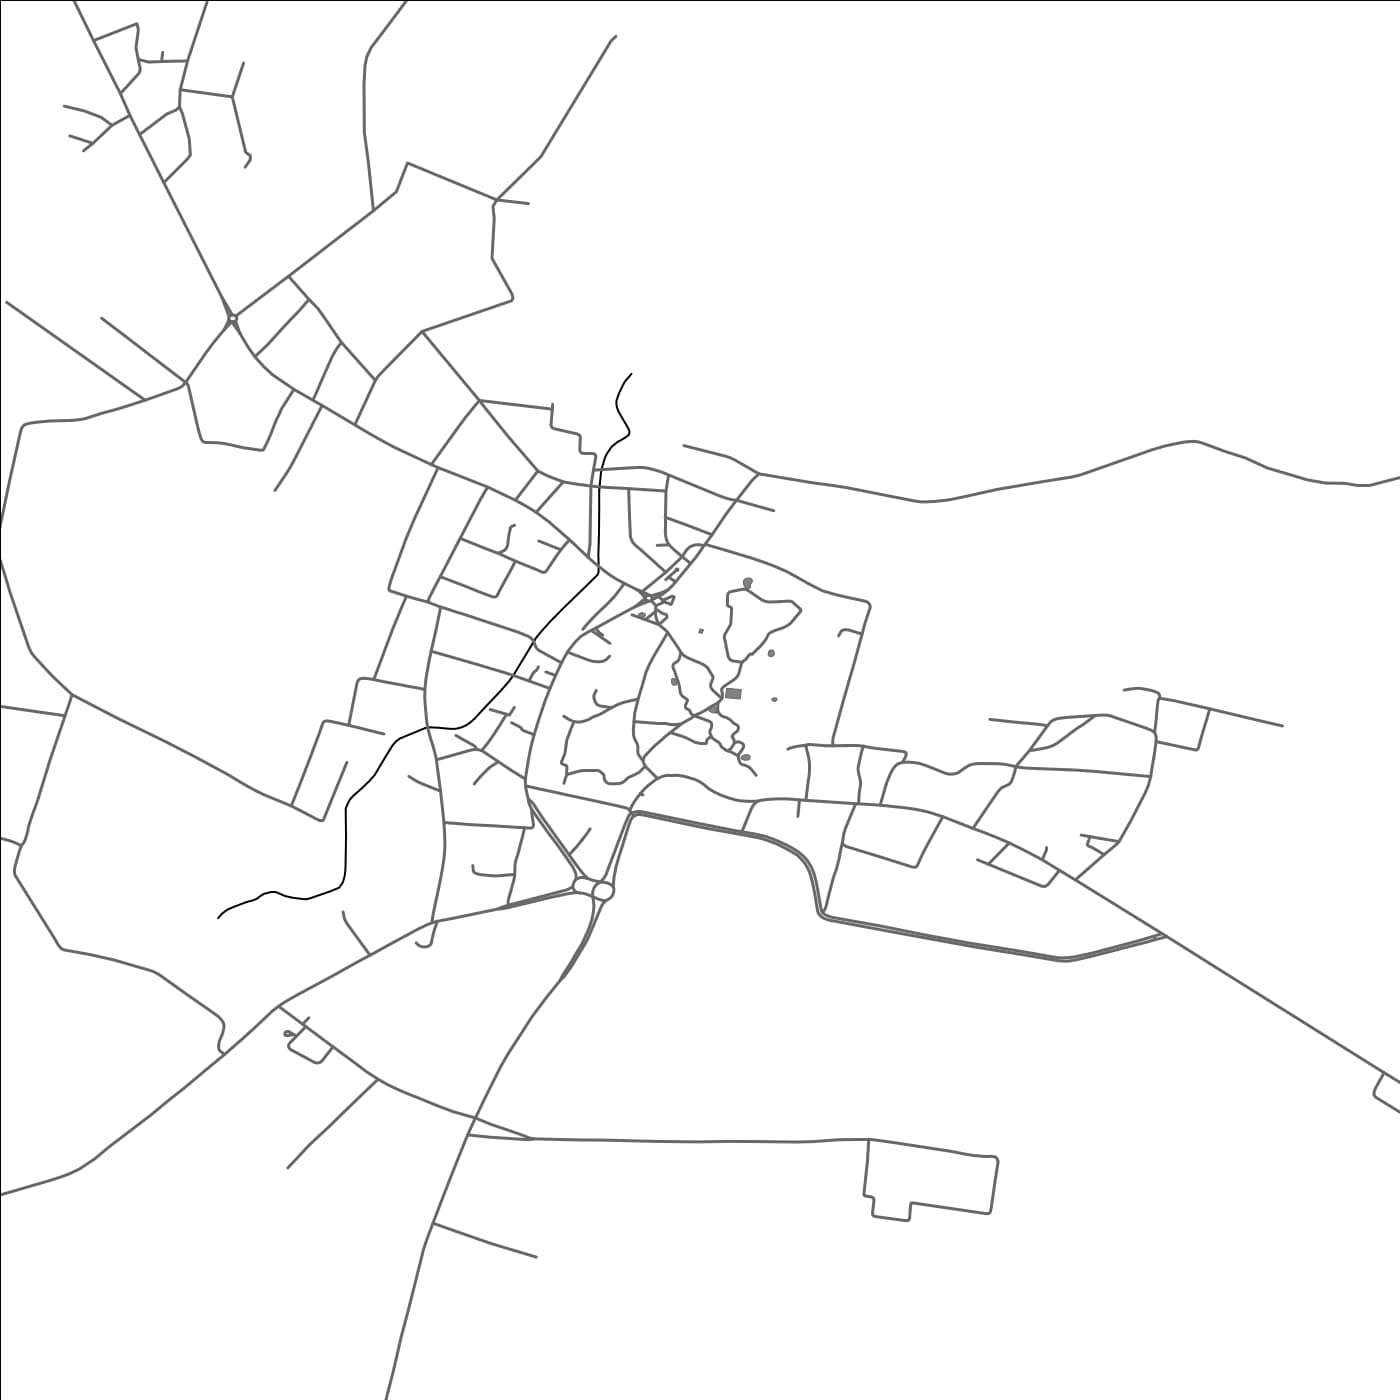 ROAD MAP OF UMM AL JIMĀL, JORDAN BY MAPBAKES